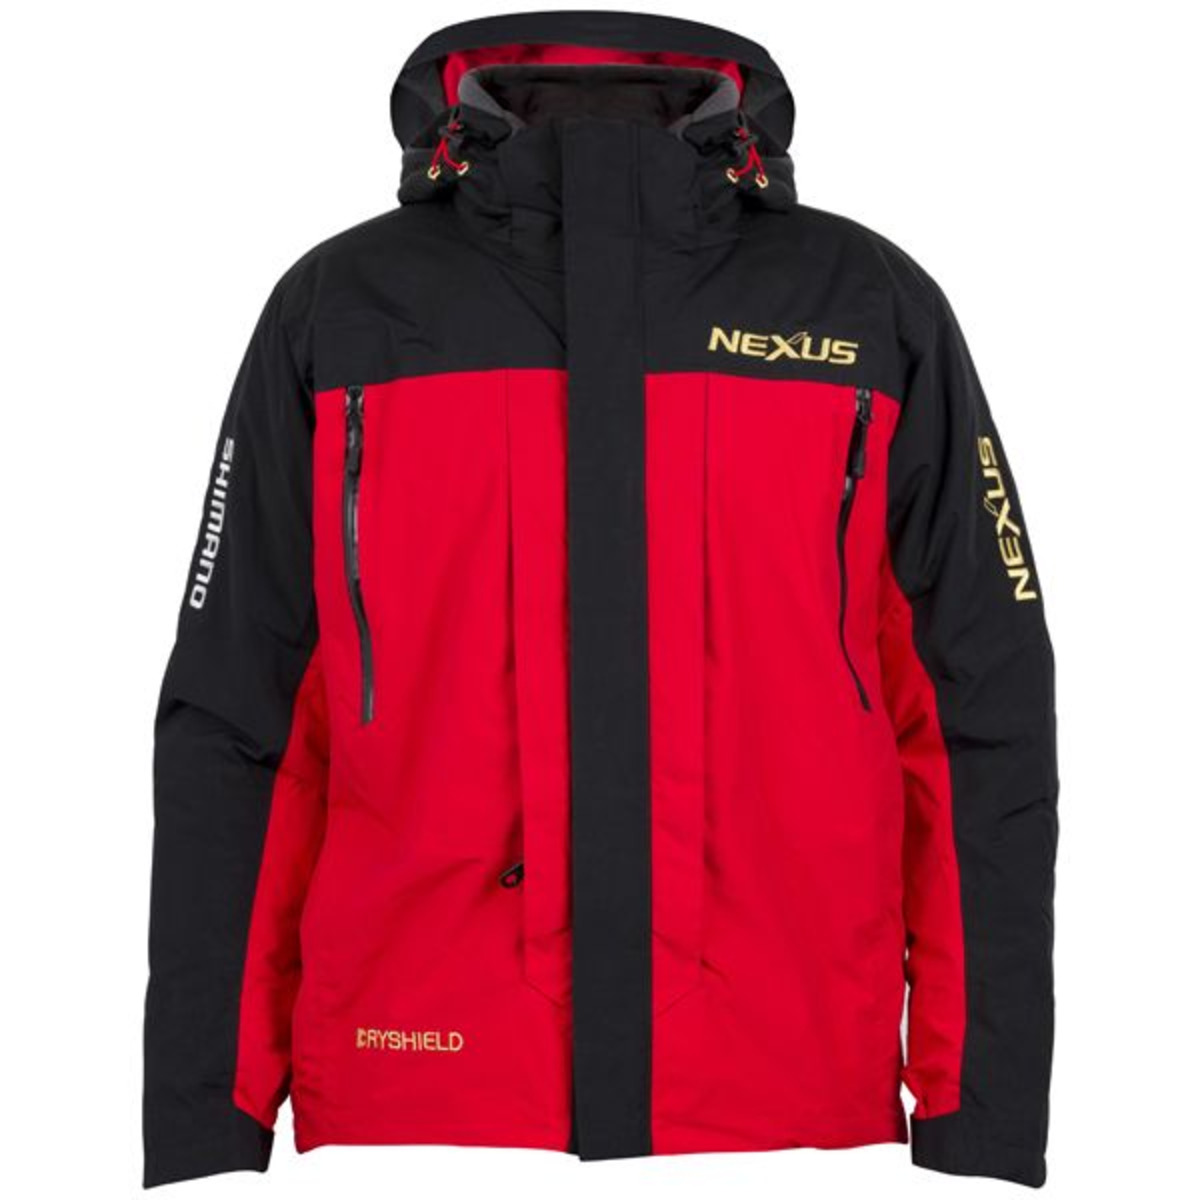 Shimano Nexus Dryshield Advance Cold Weather Jacket - Red - L